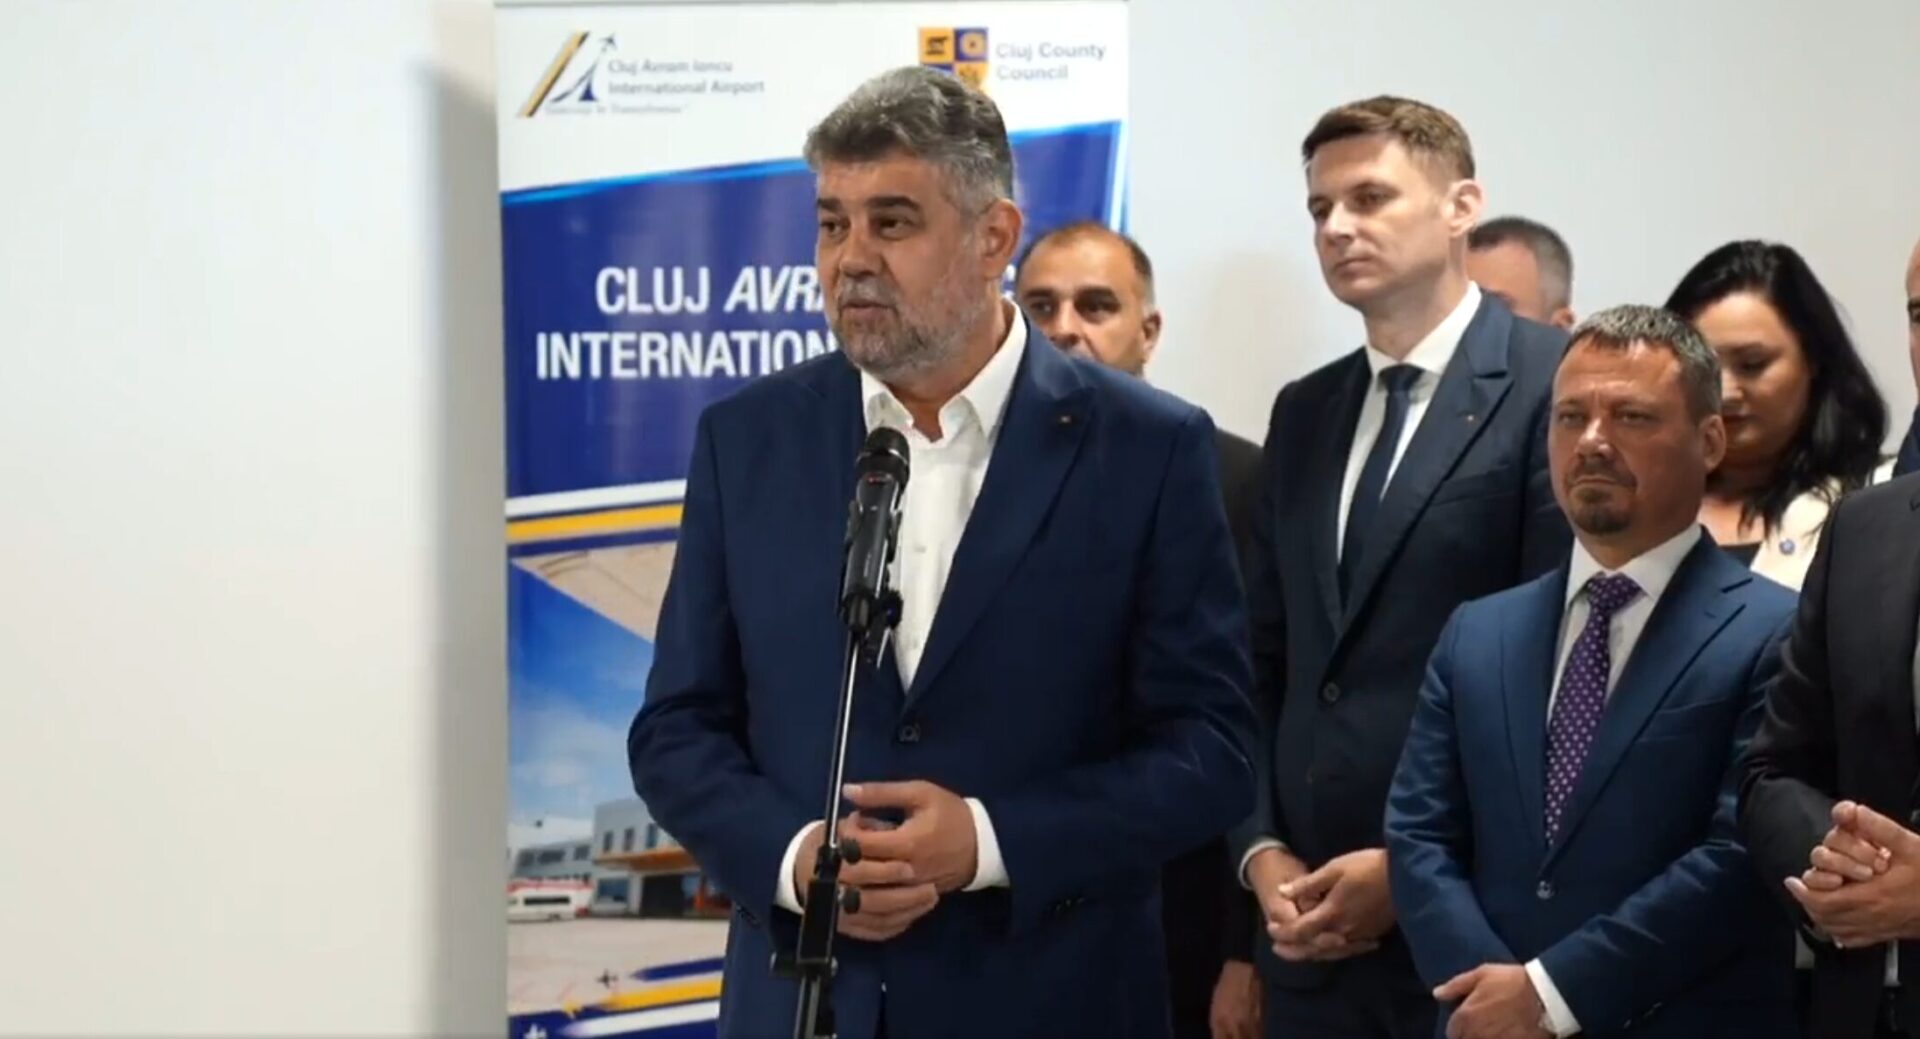 PS News TV | Vizita Premierul Ciolacu la Cluj-Napoca